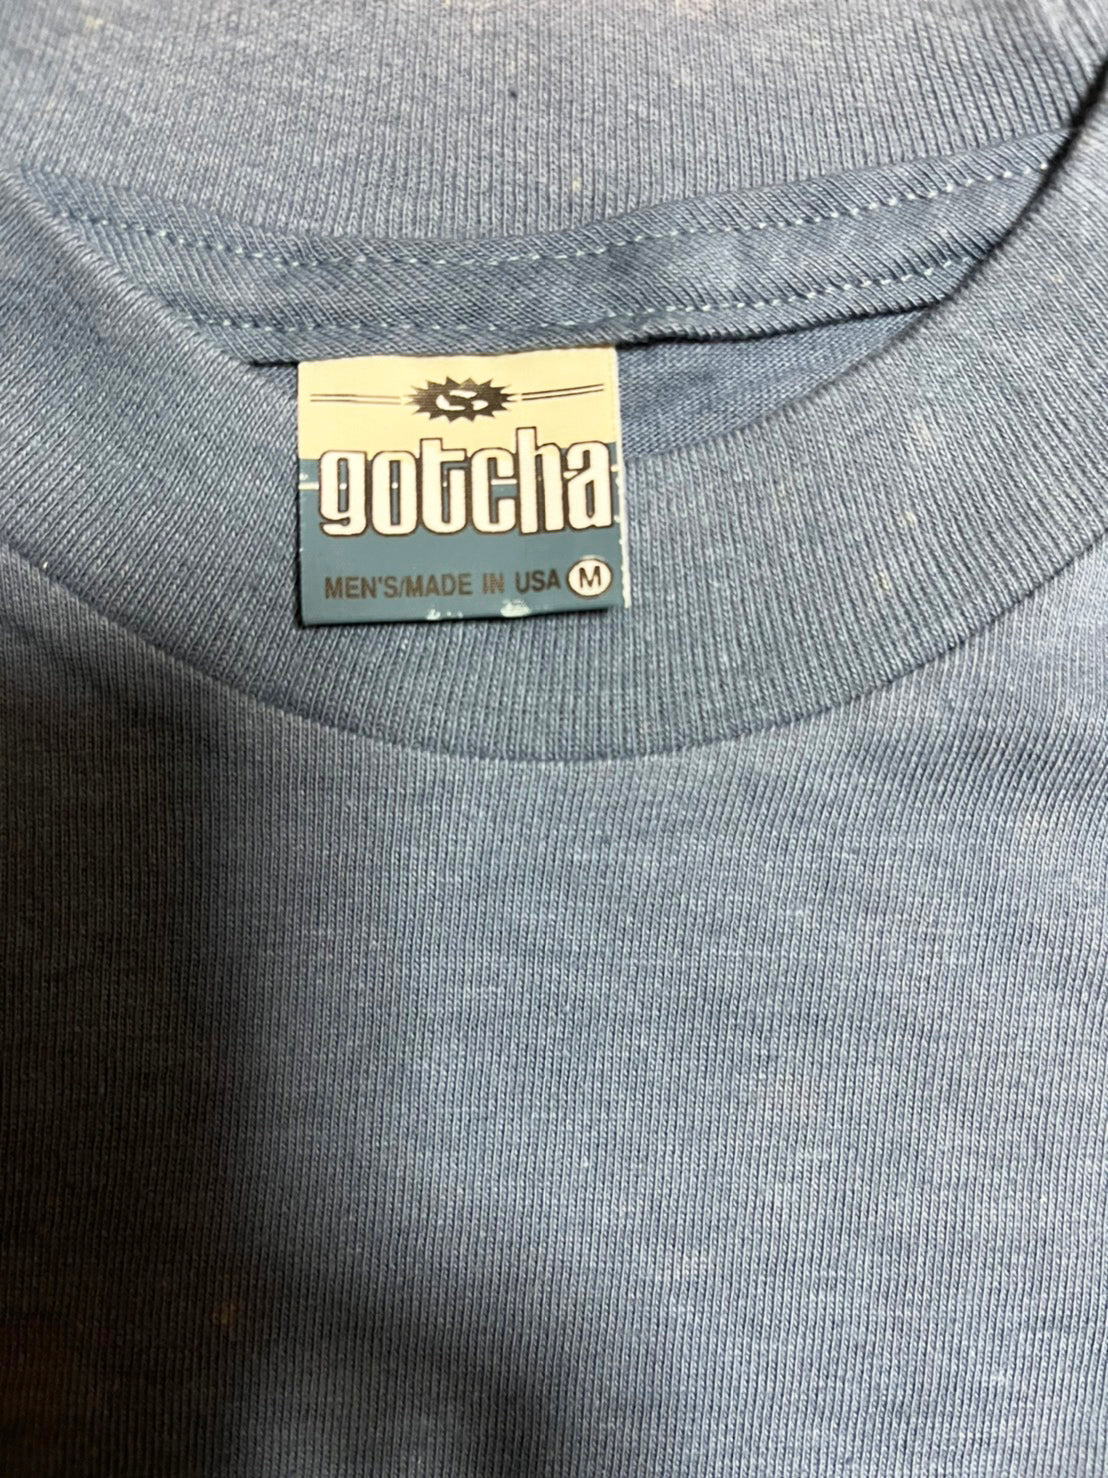 【gotcha】vintage surf 90's gotcha T-shirt (men's M)